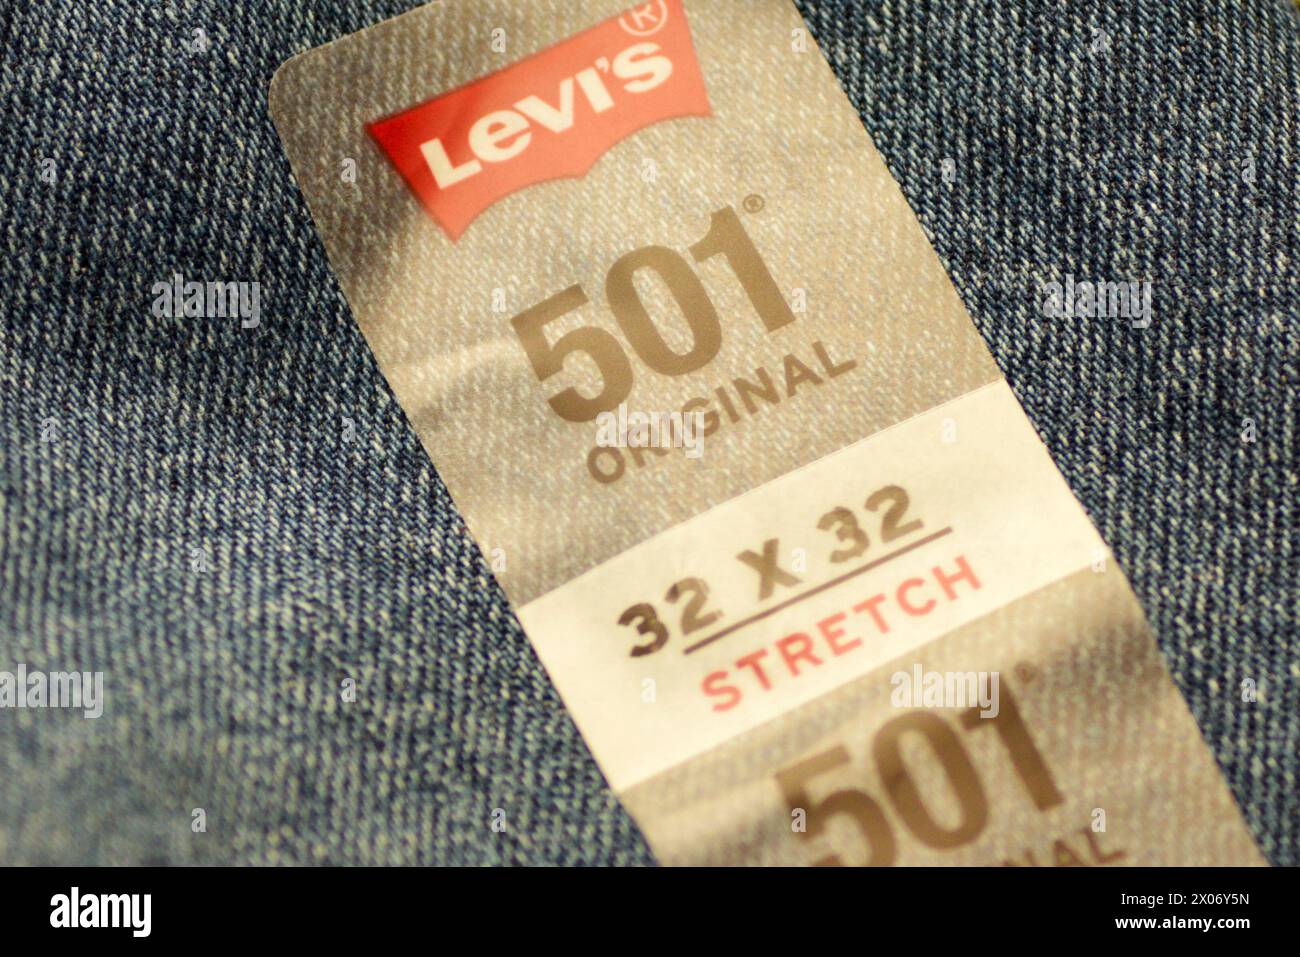 Levi's 501 original stretch jeans size 32 label Stock Photo